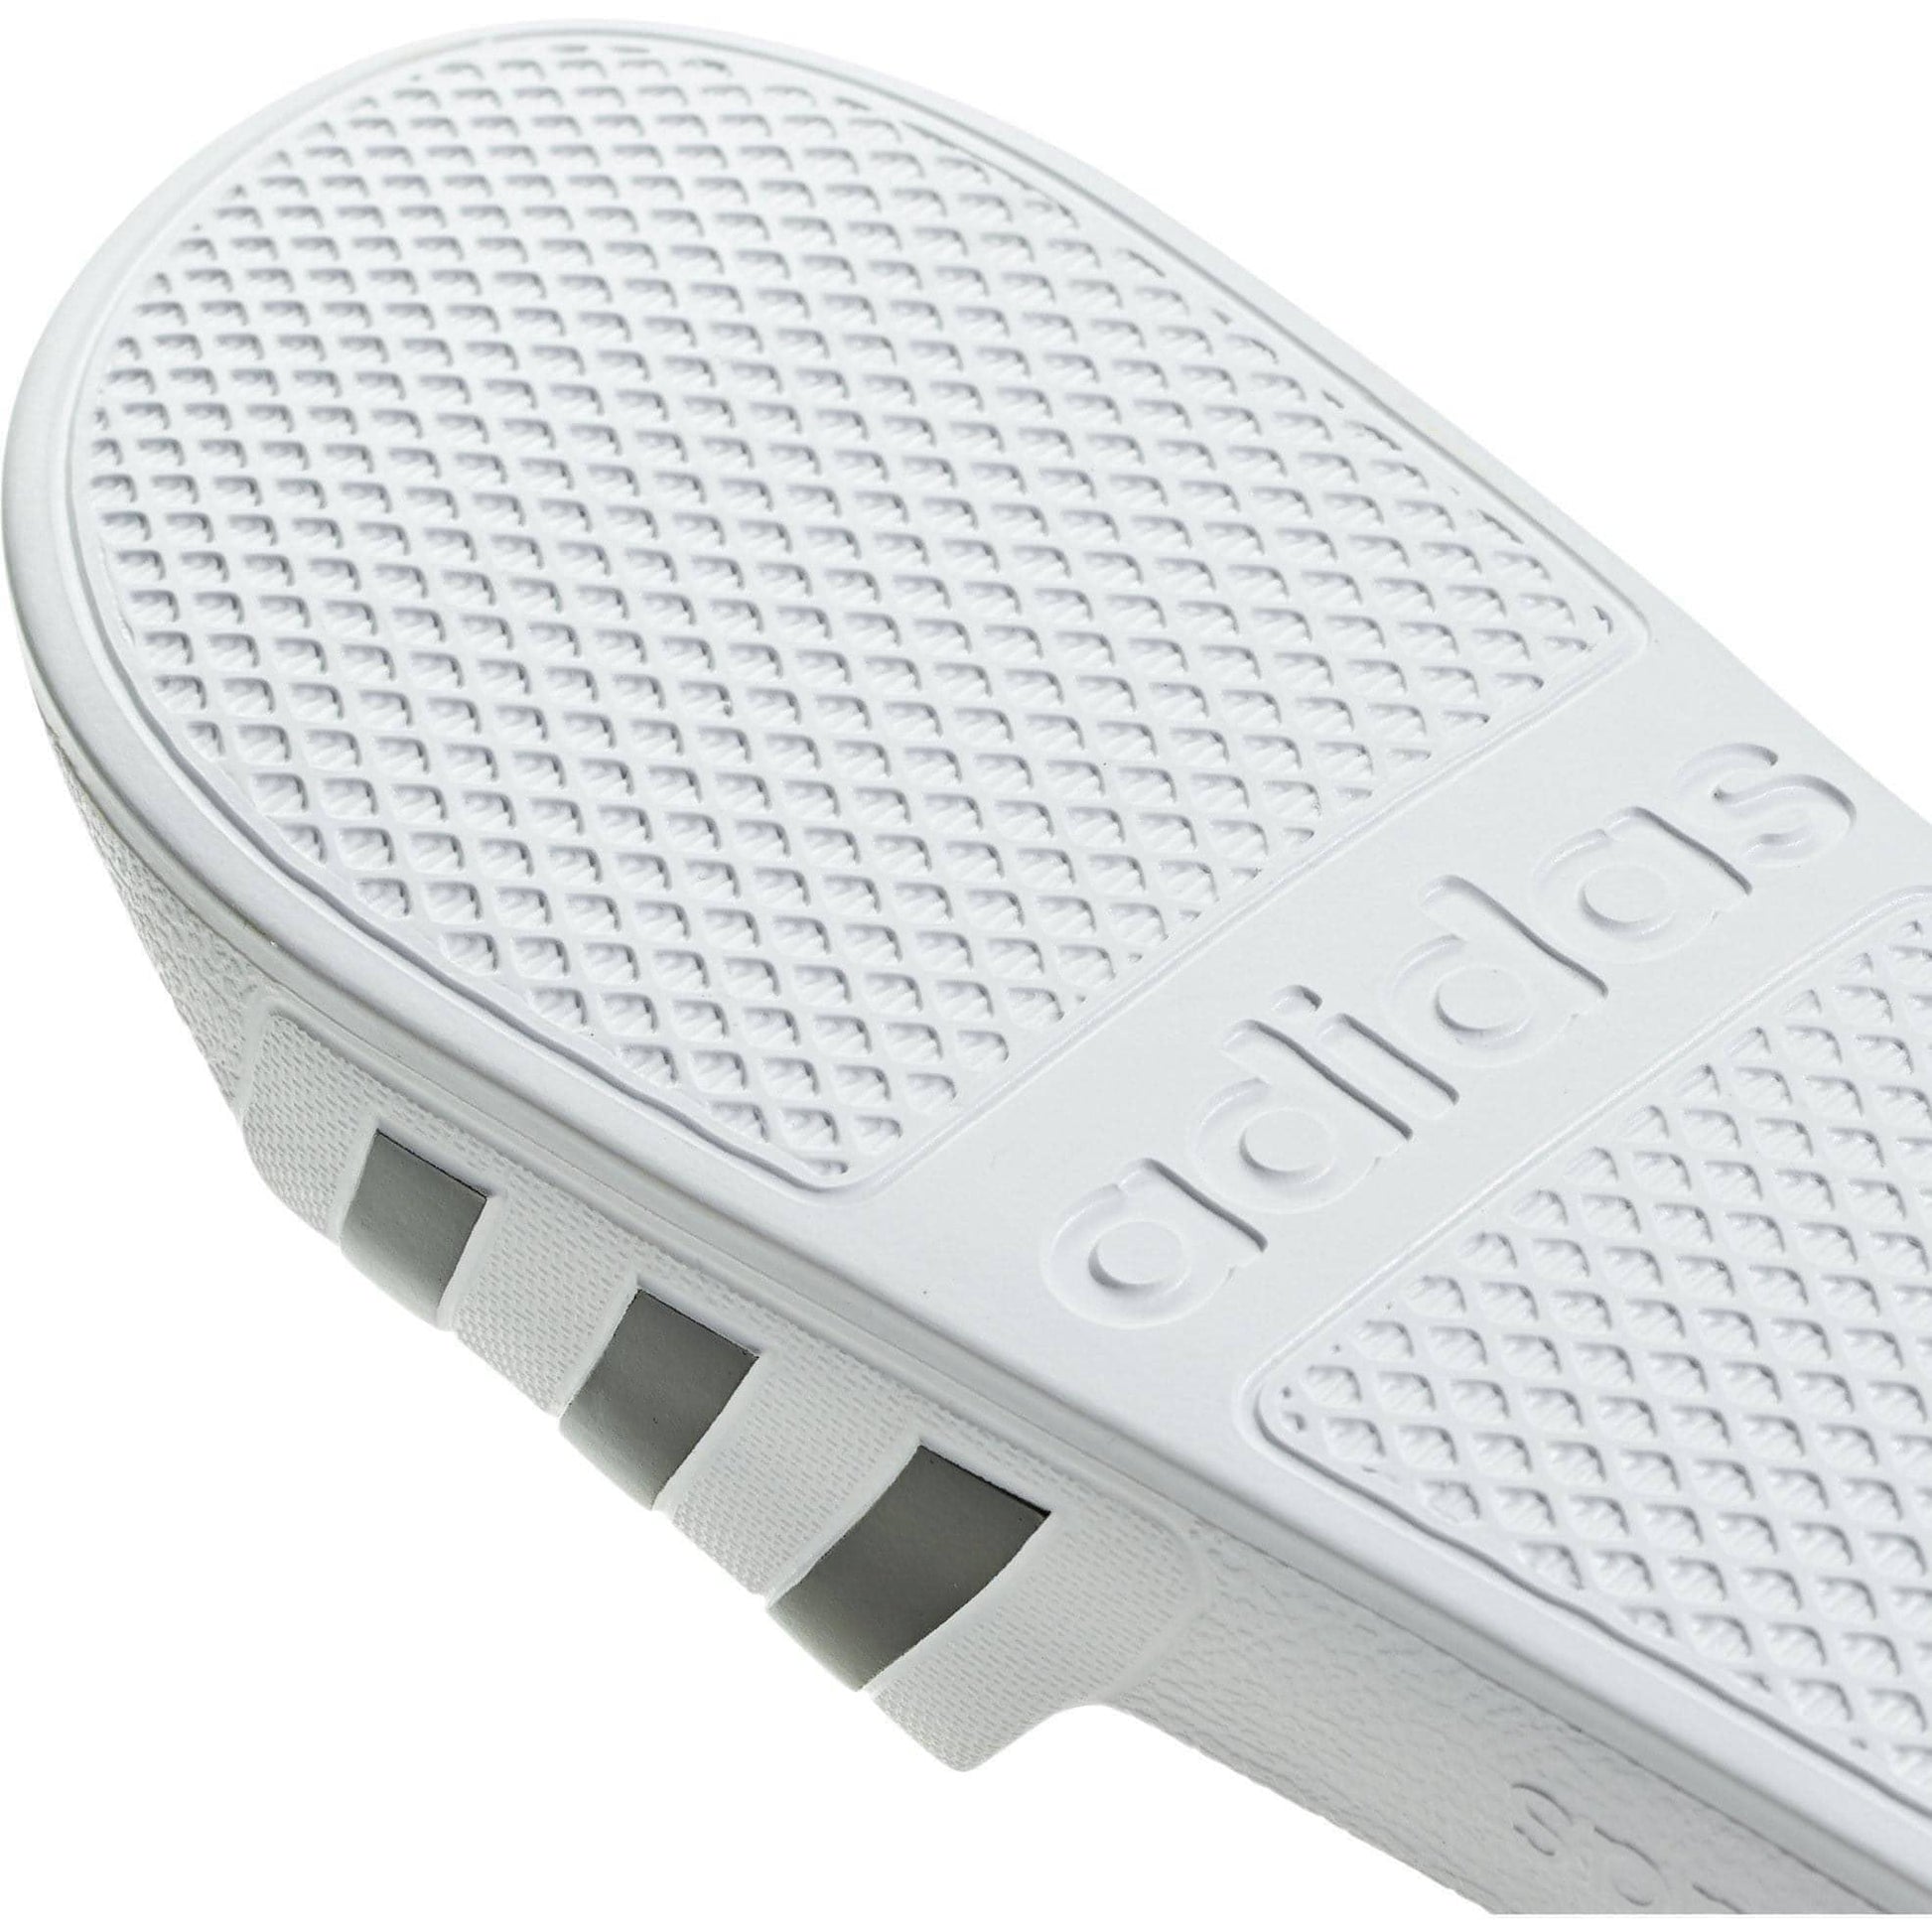 adidas Adilette Aqua Sliders - White - Start Fitness